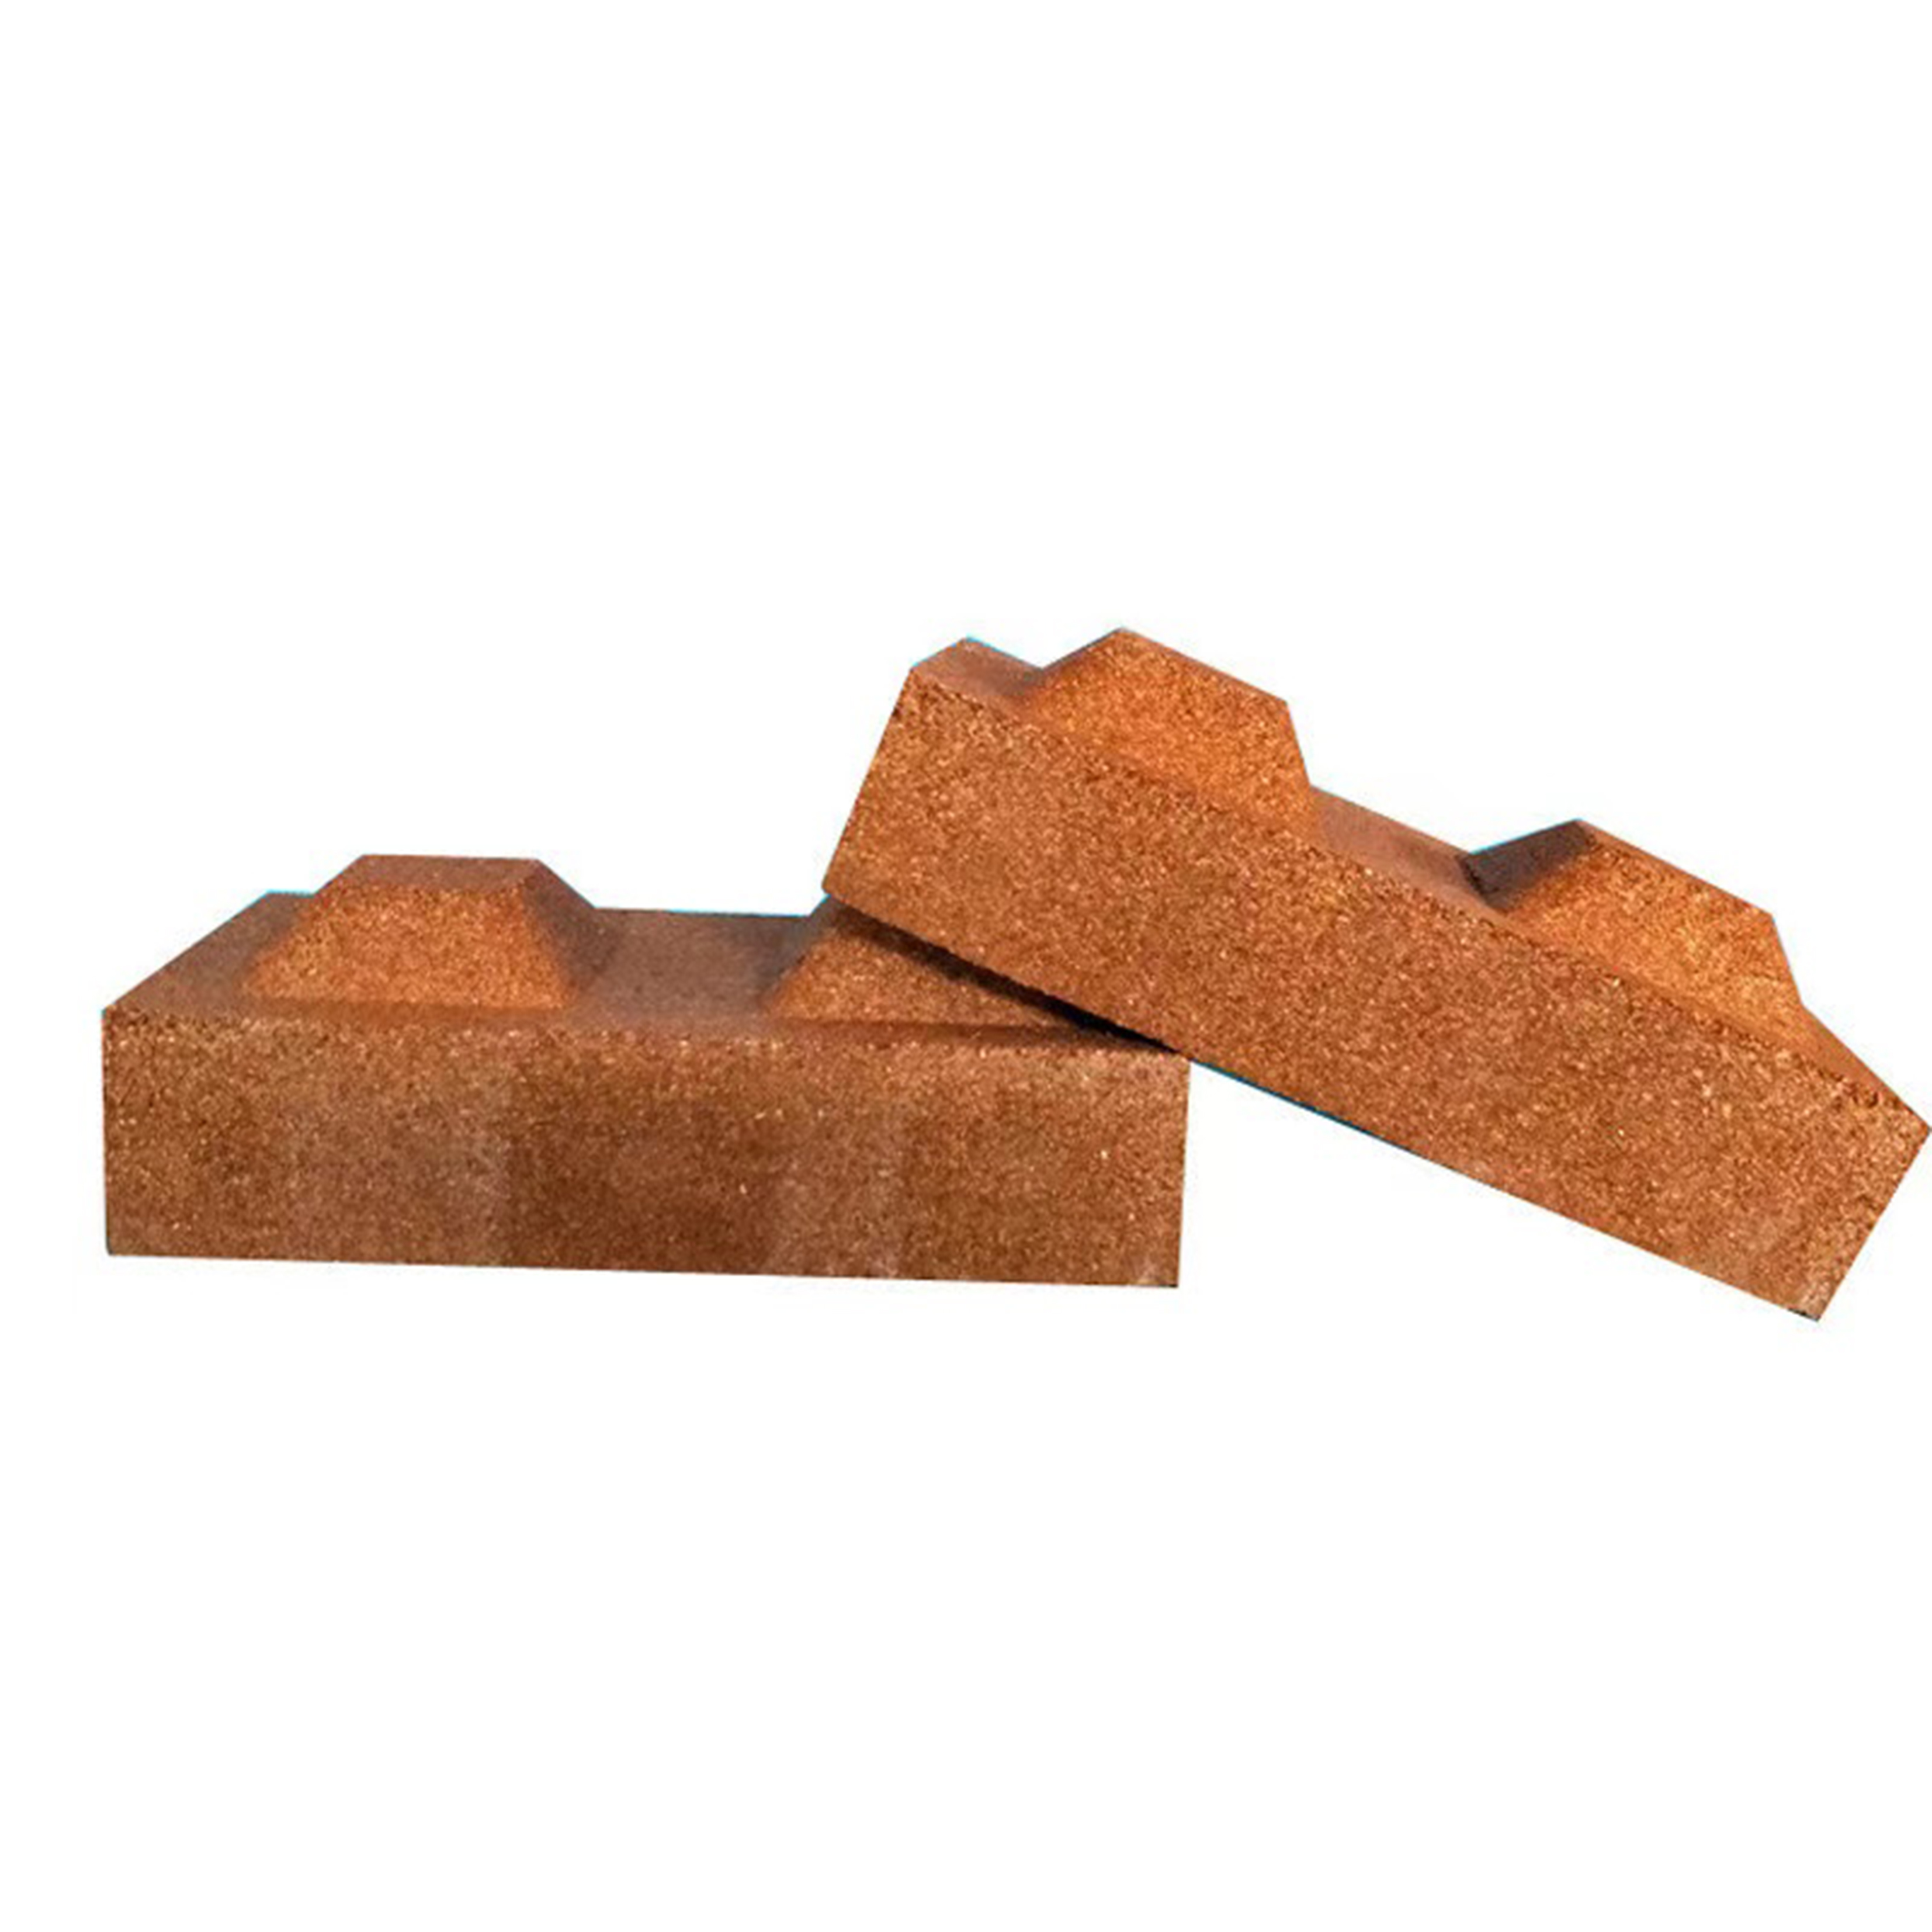 Novel fire retardant module expanded fire-resistant module fibrous thermal insulation fireproof brick